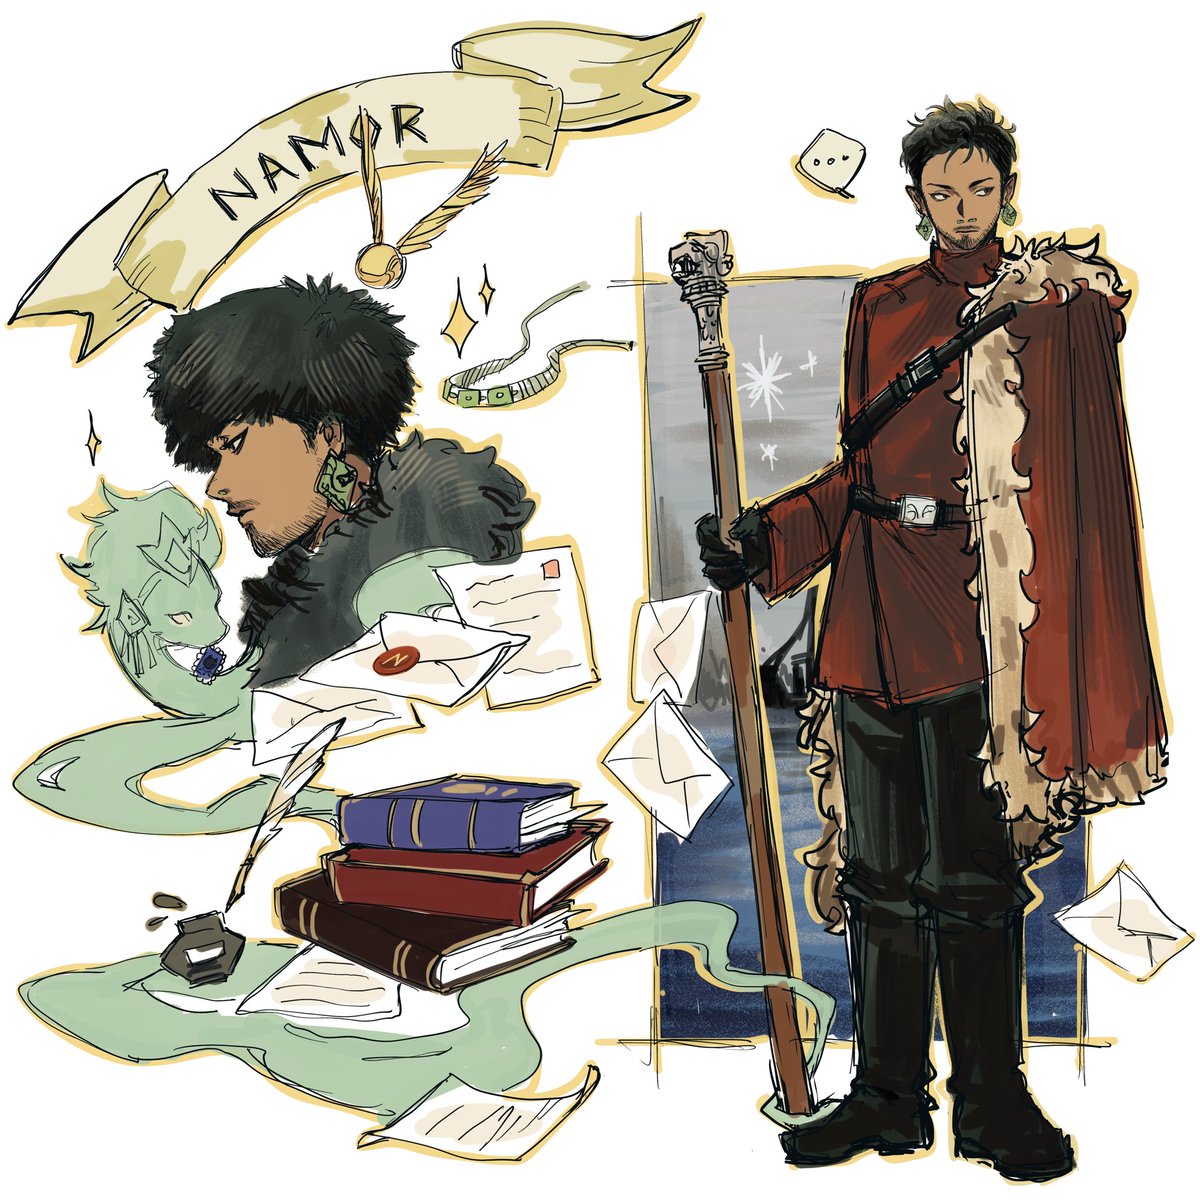 hogwarts school uniform dark skin school uniform wand black hair holding wand one eye closed  illustration images